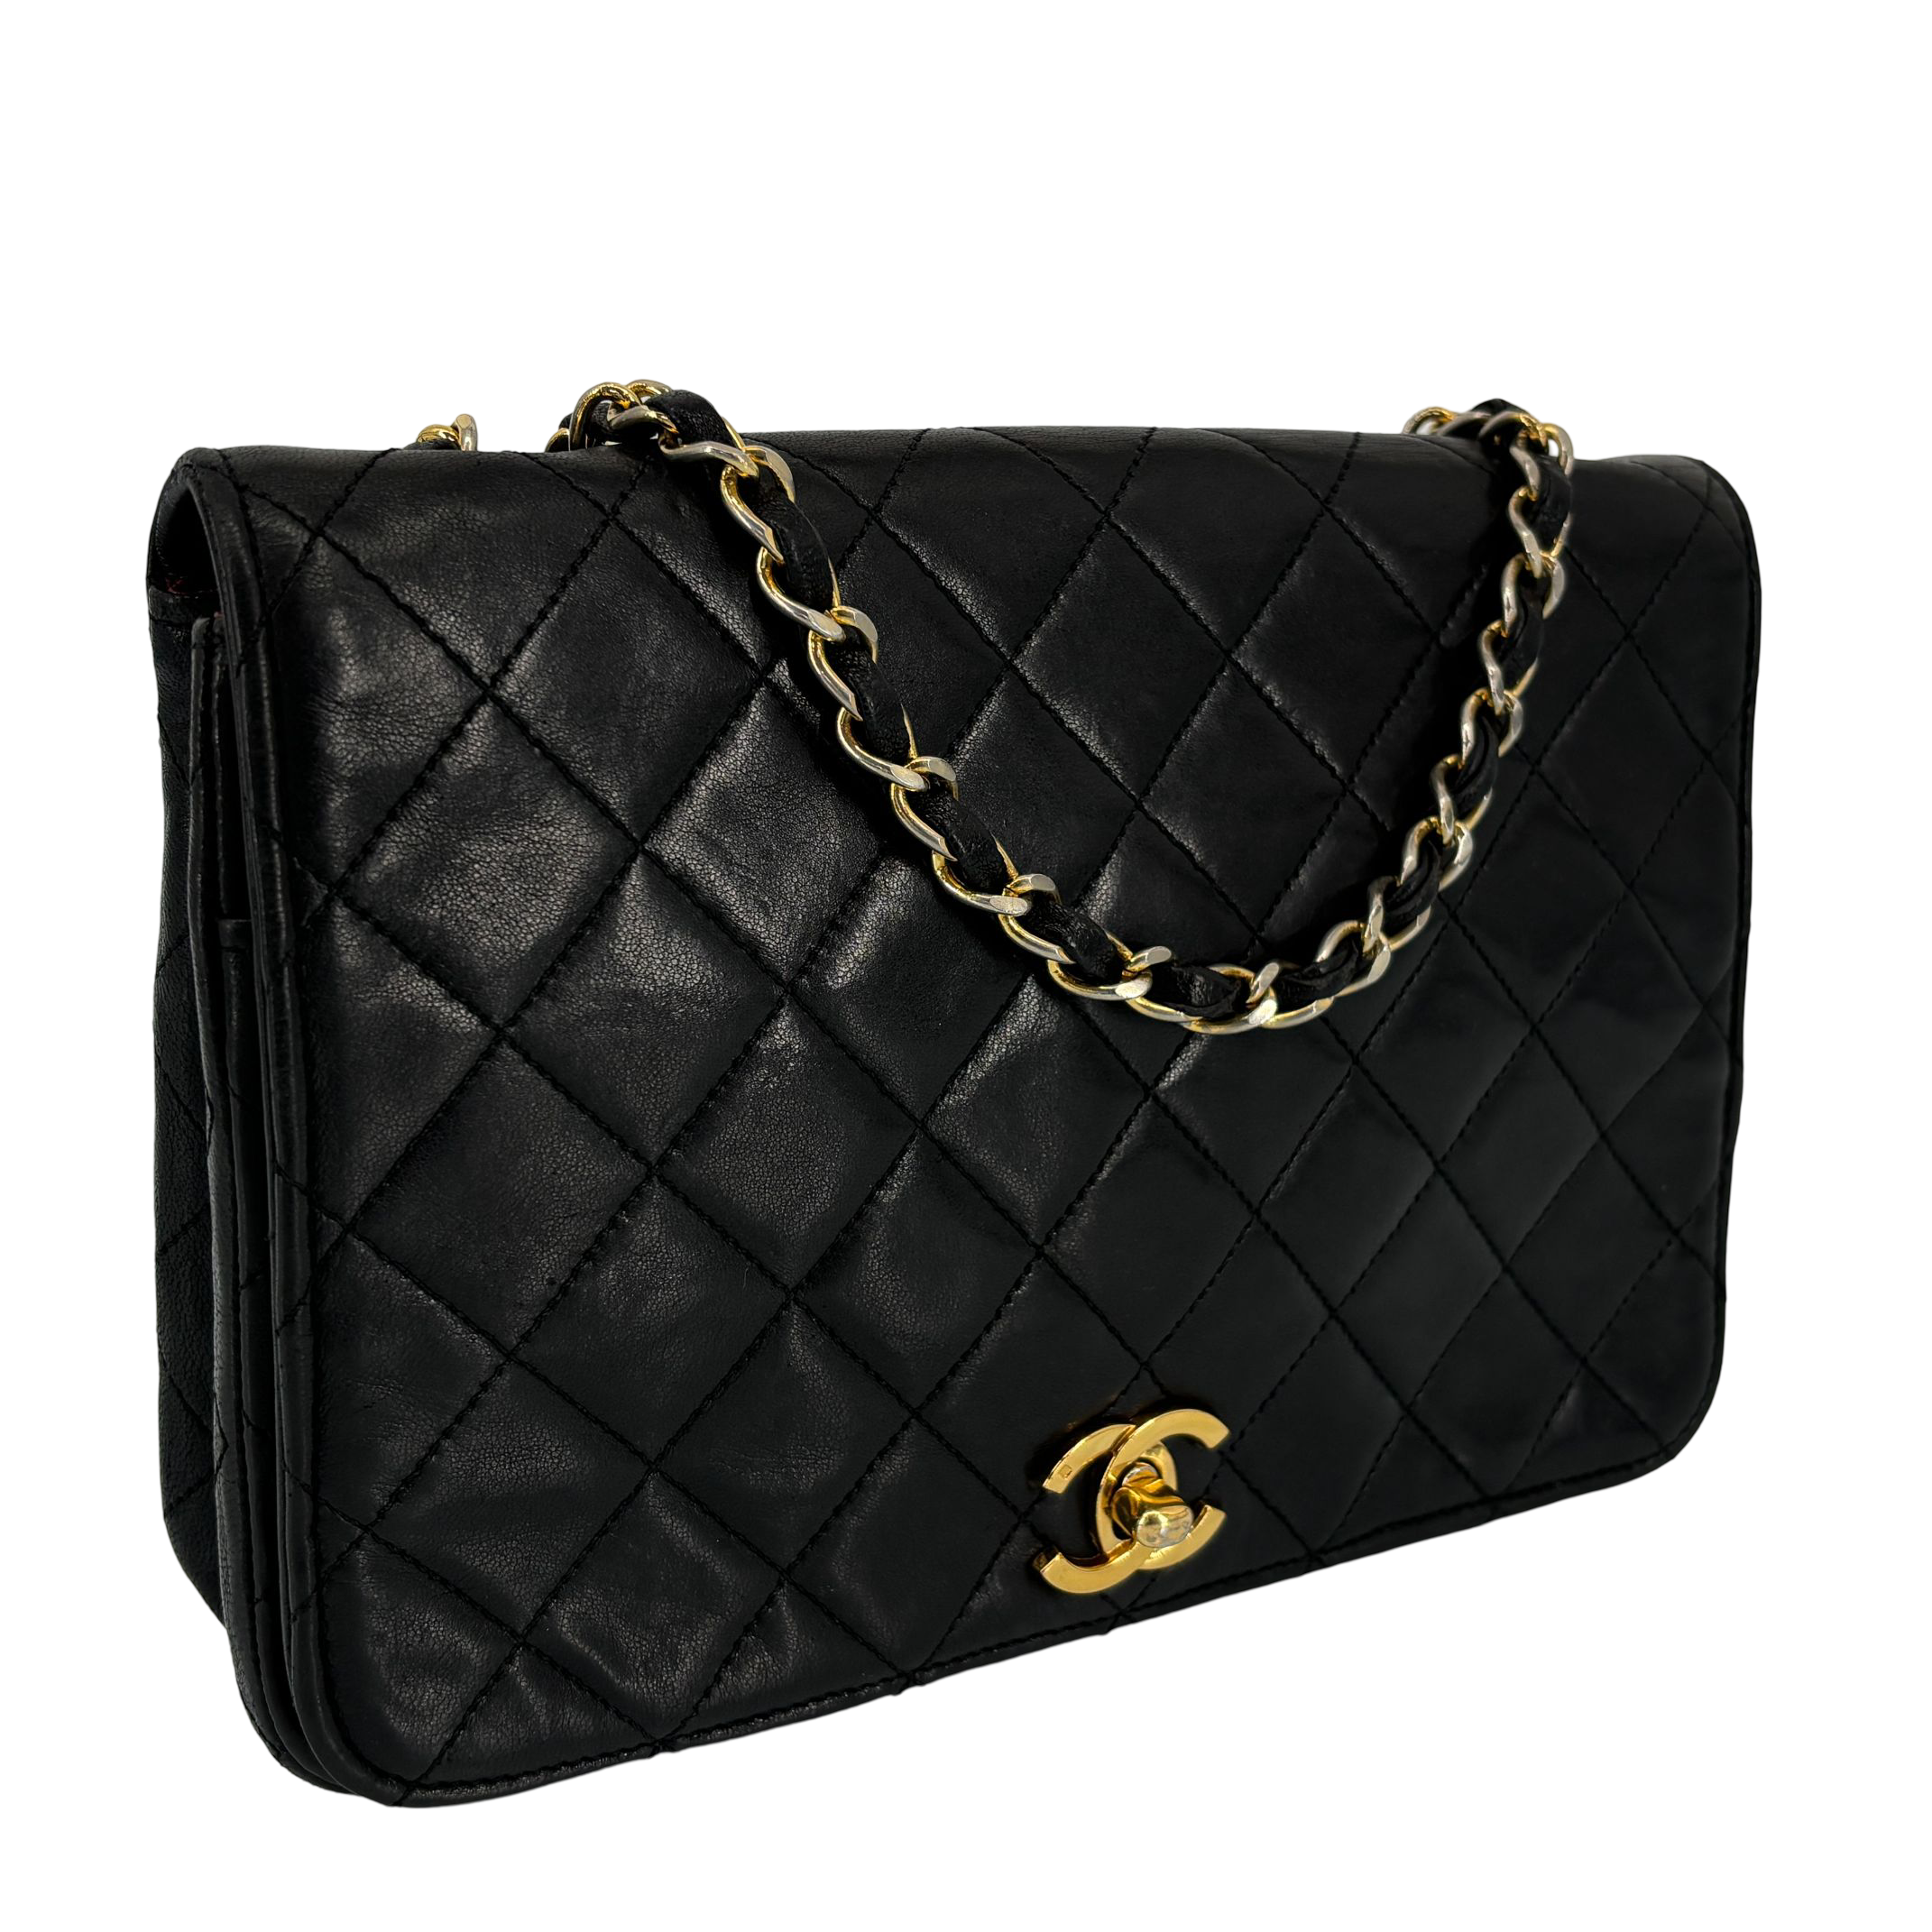 Chanel Full Flap Bag Turn-Lock Black Matelassé Leather